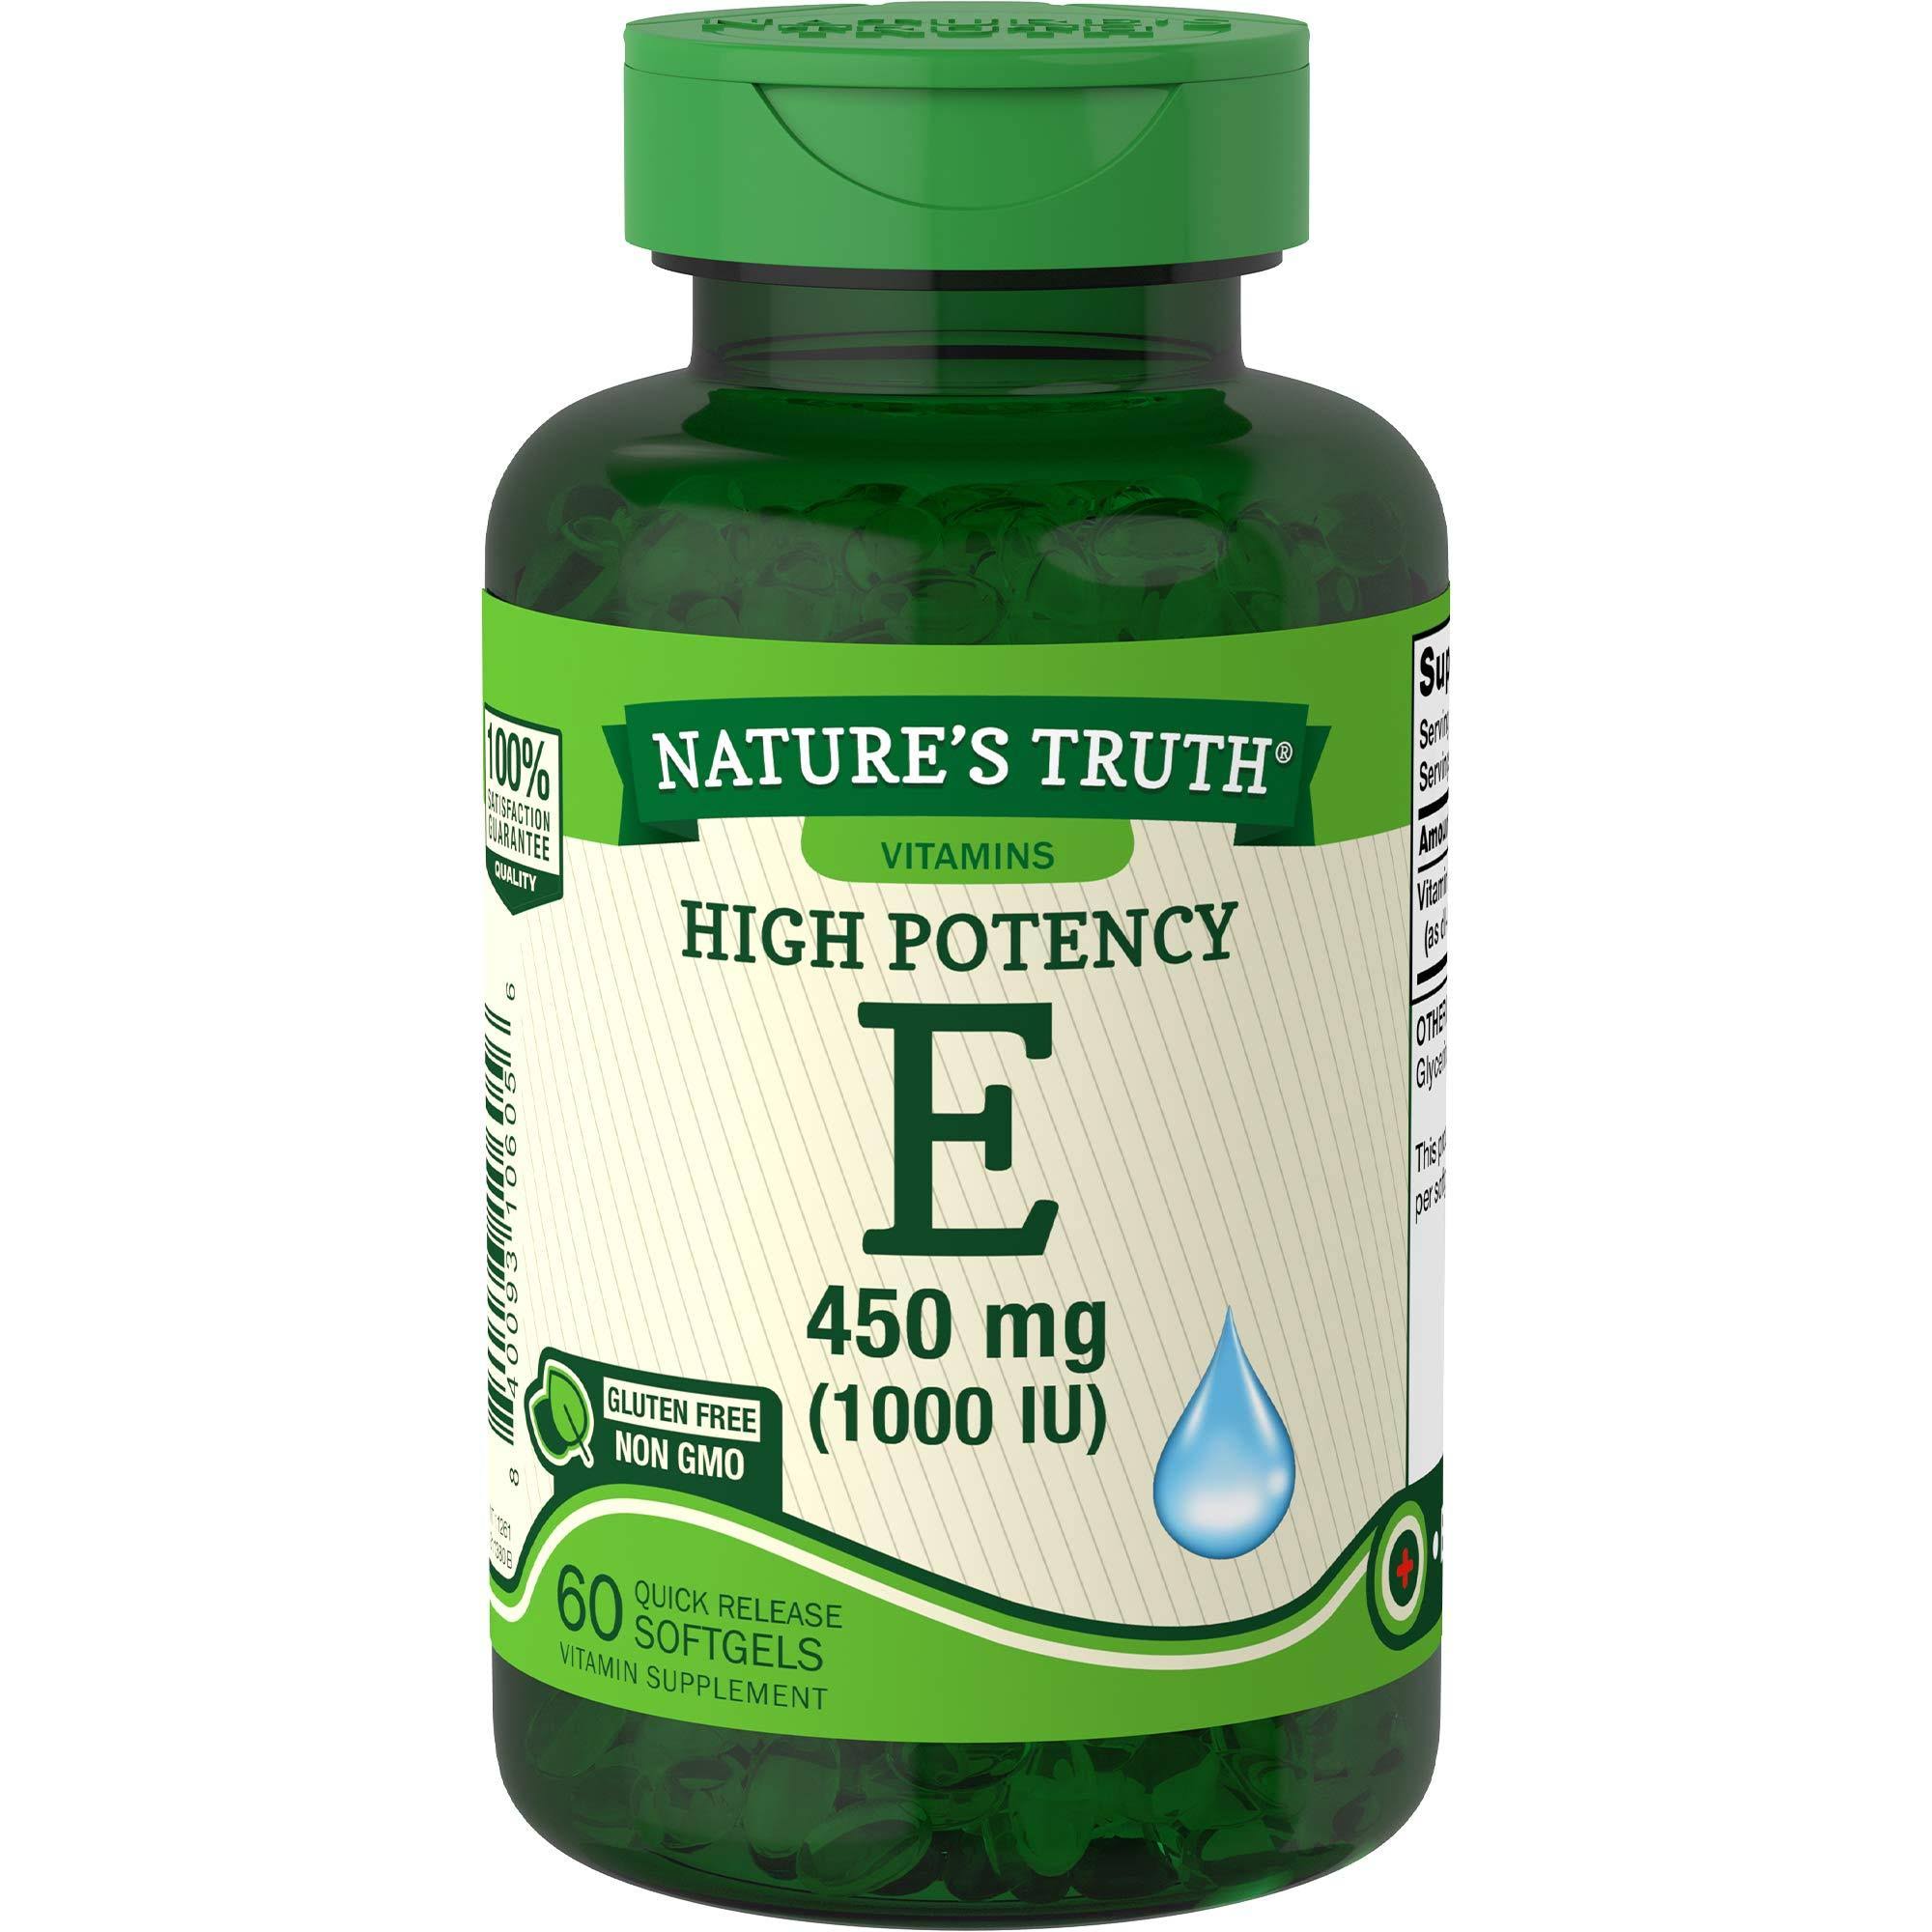 Nature's Truth Vitamin E Pure DL-Alpha, 1,000 IU, 60 Count